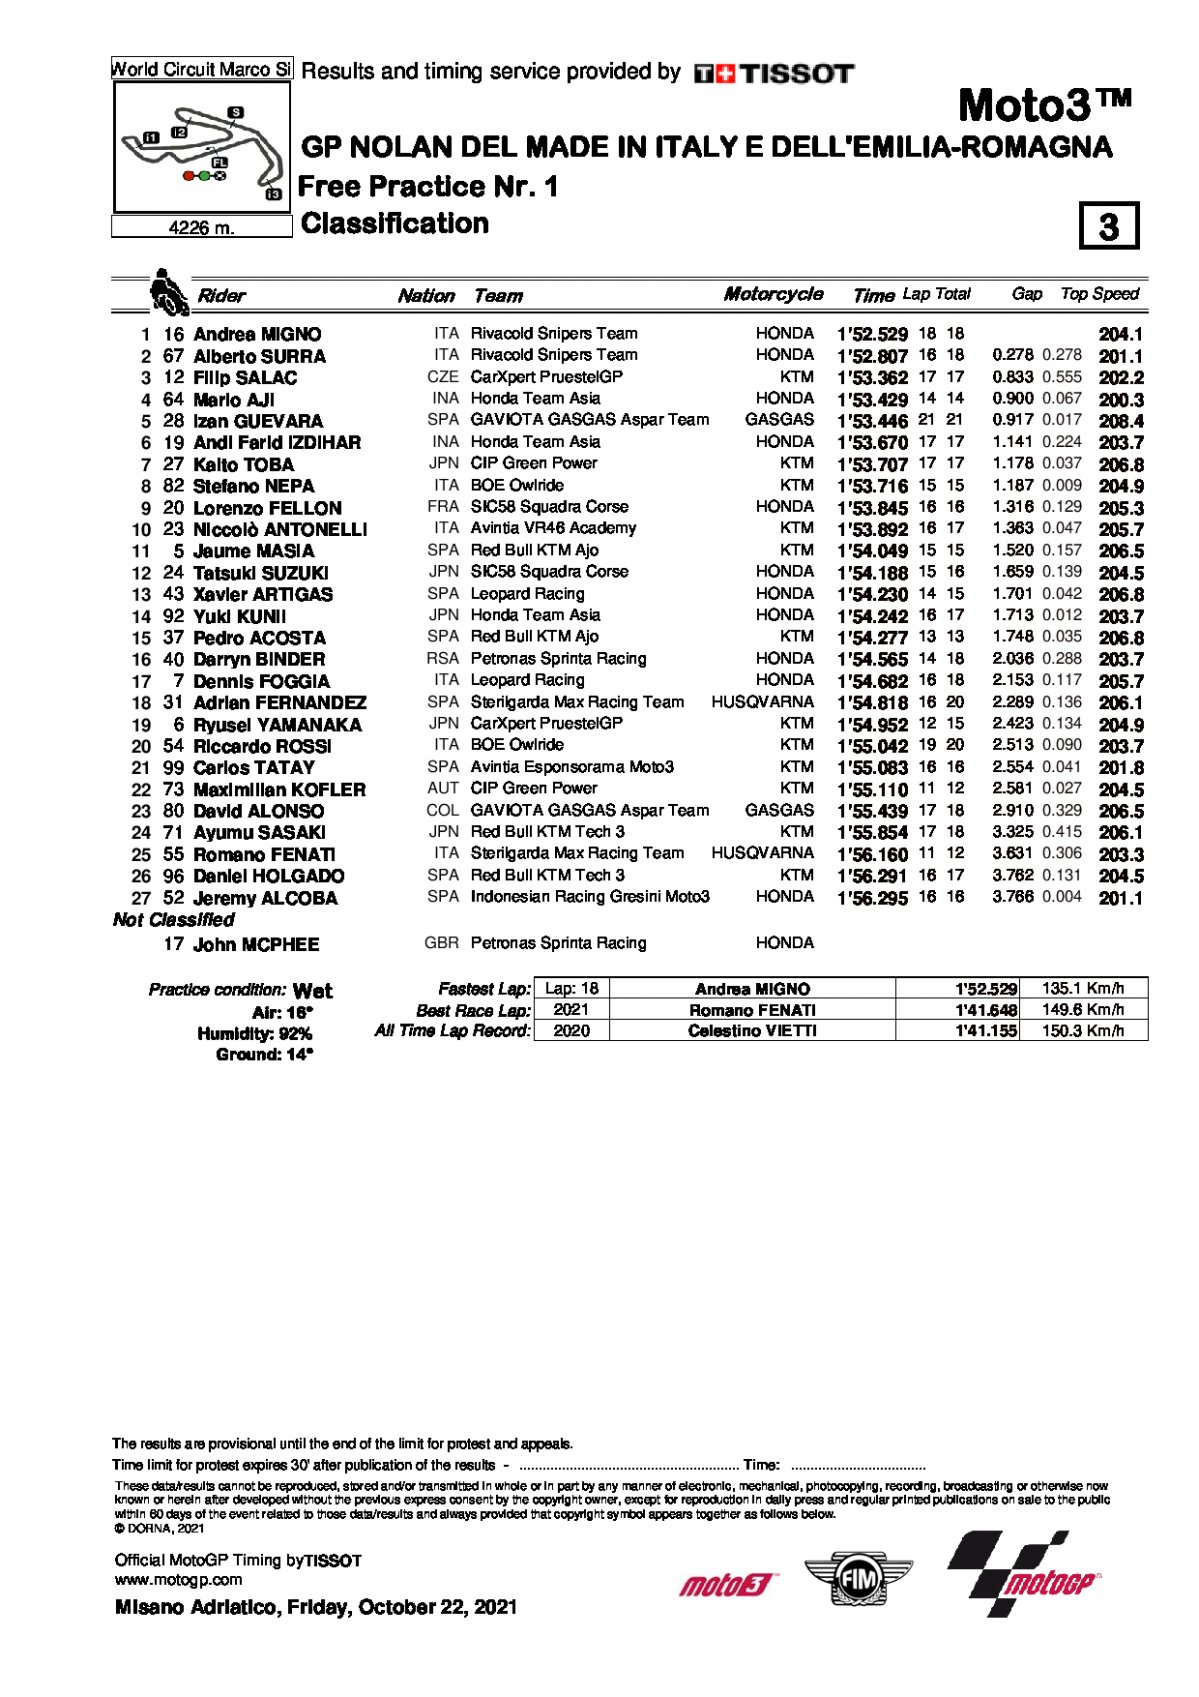 Результаты FP1 Гран-При Эмильи-Романьи, Moto3 (22/10/2021)